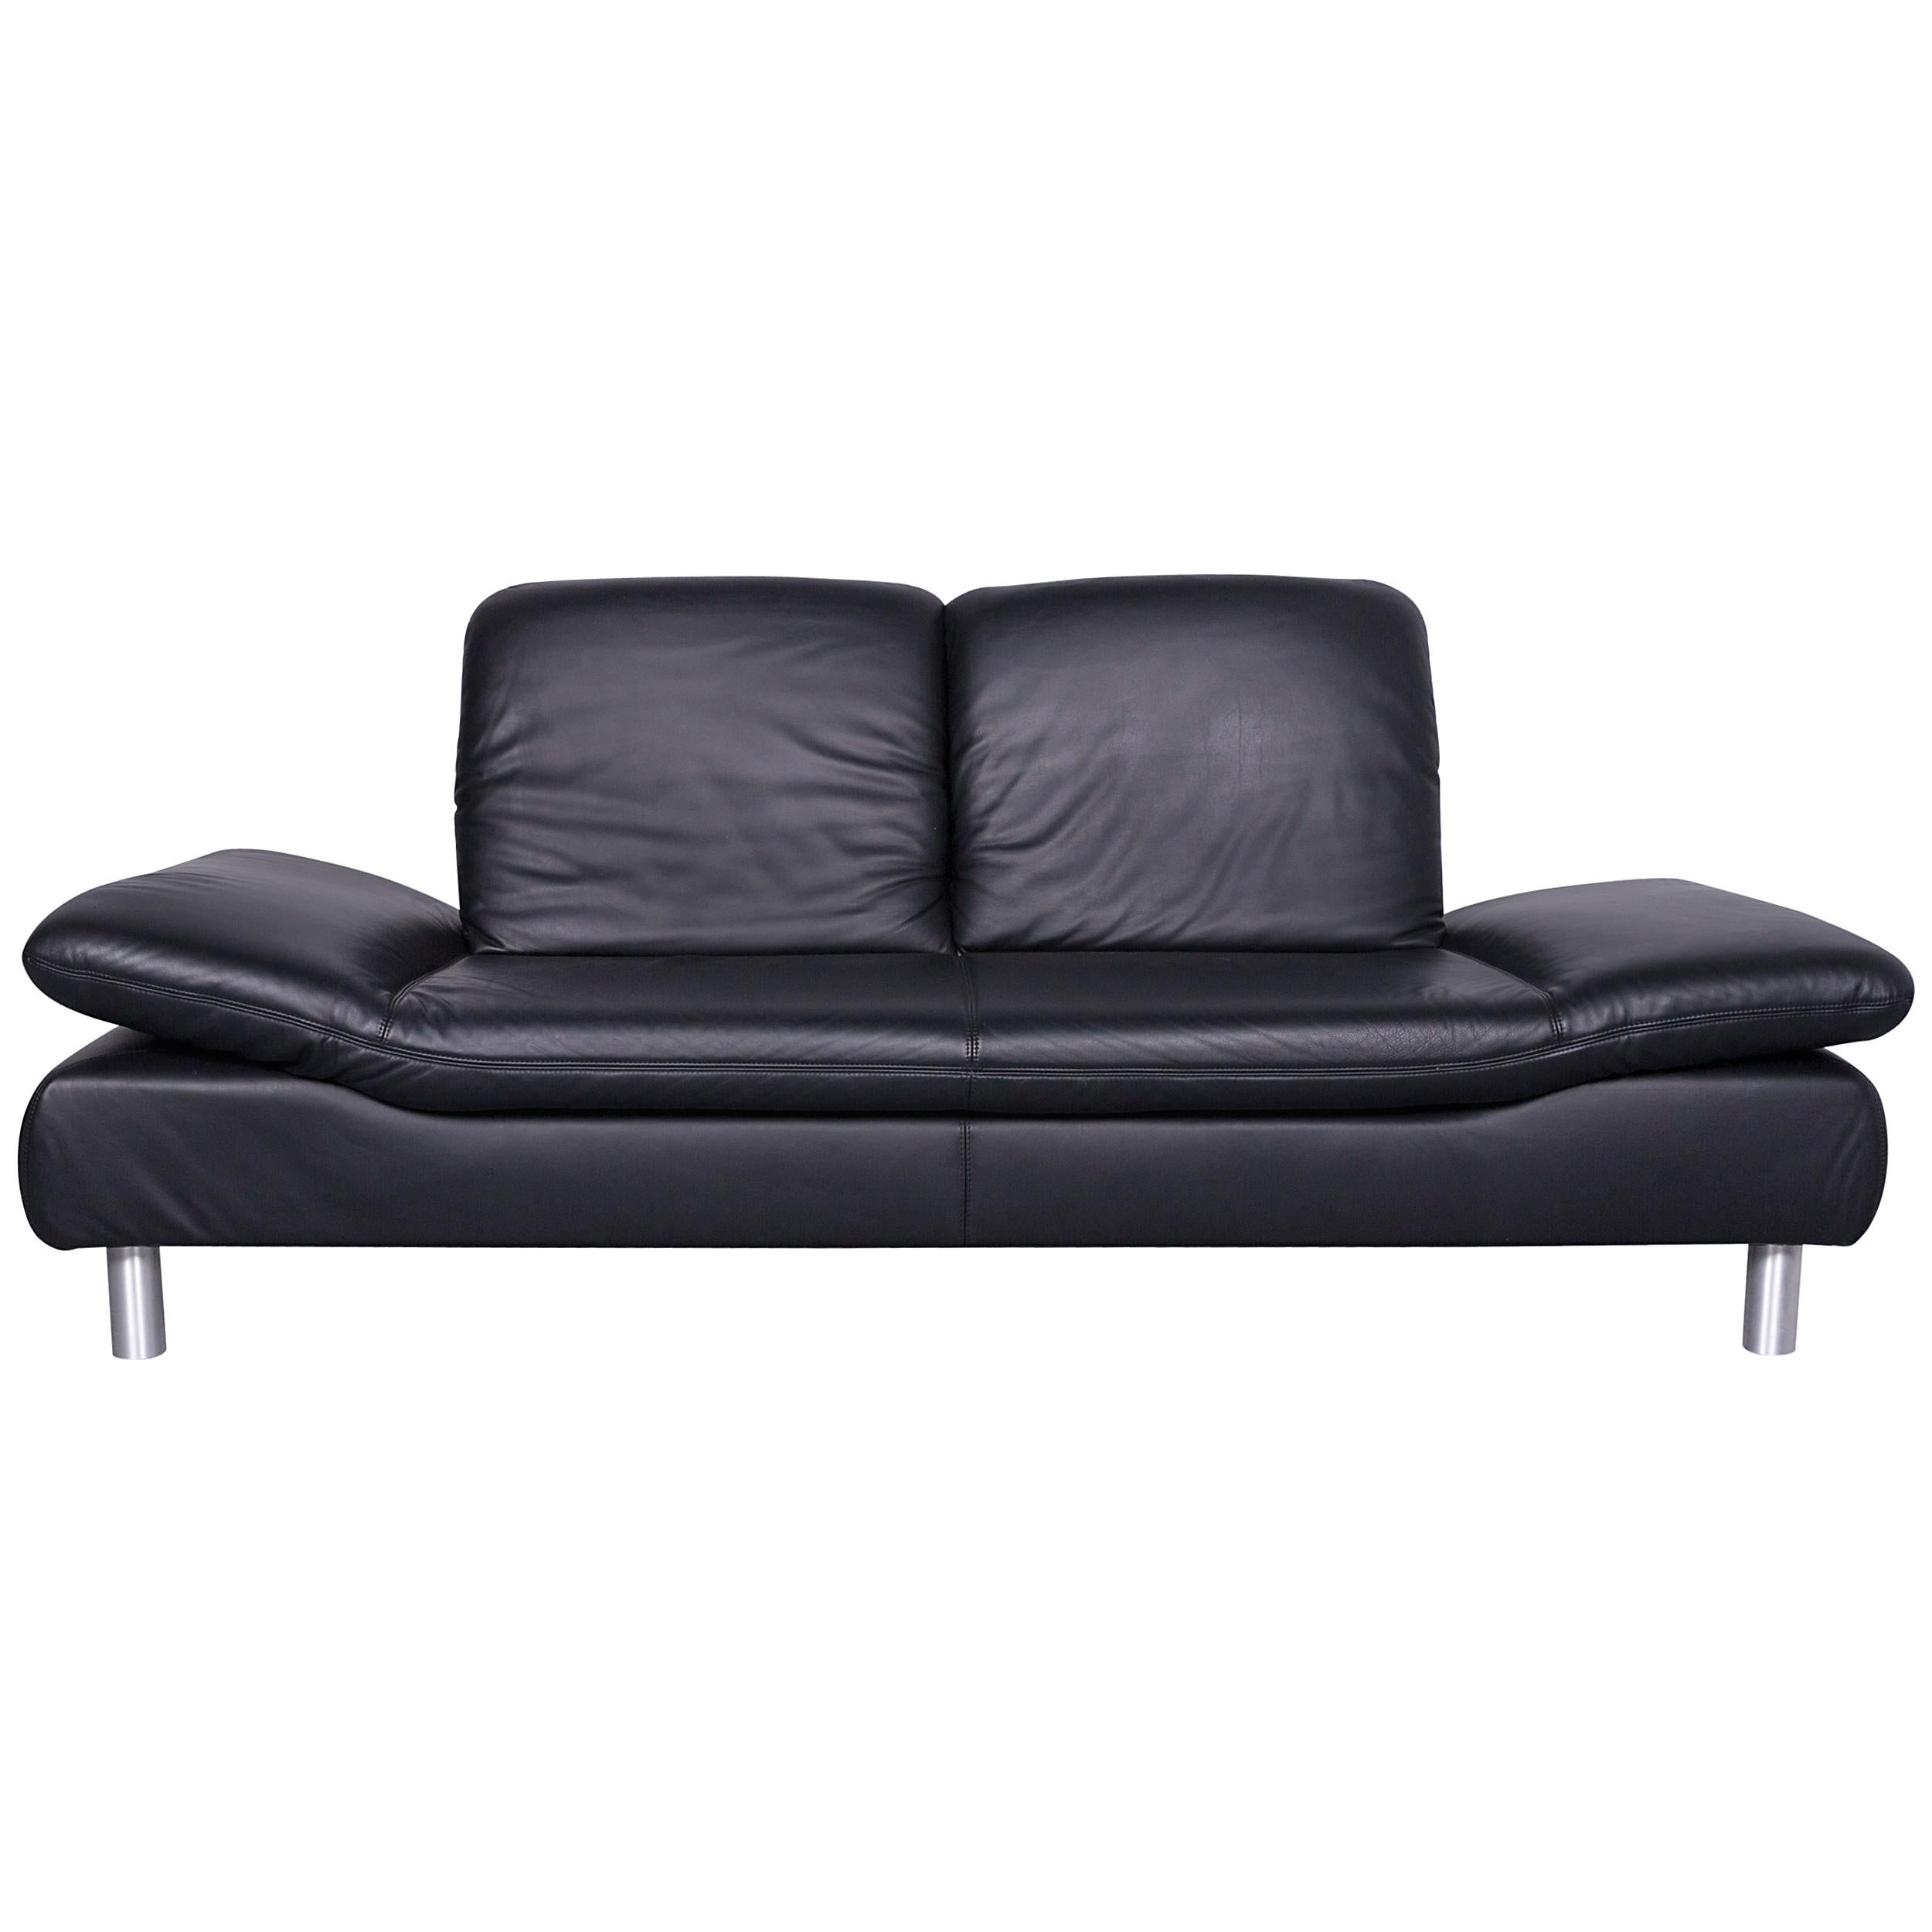 Koinor Rivoli Designer Leather Three-Seat Sofa in Black with Functions